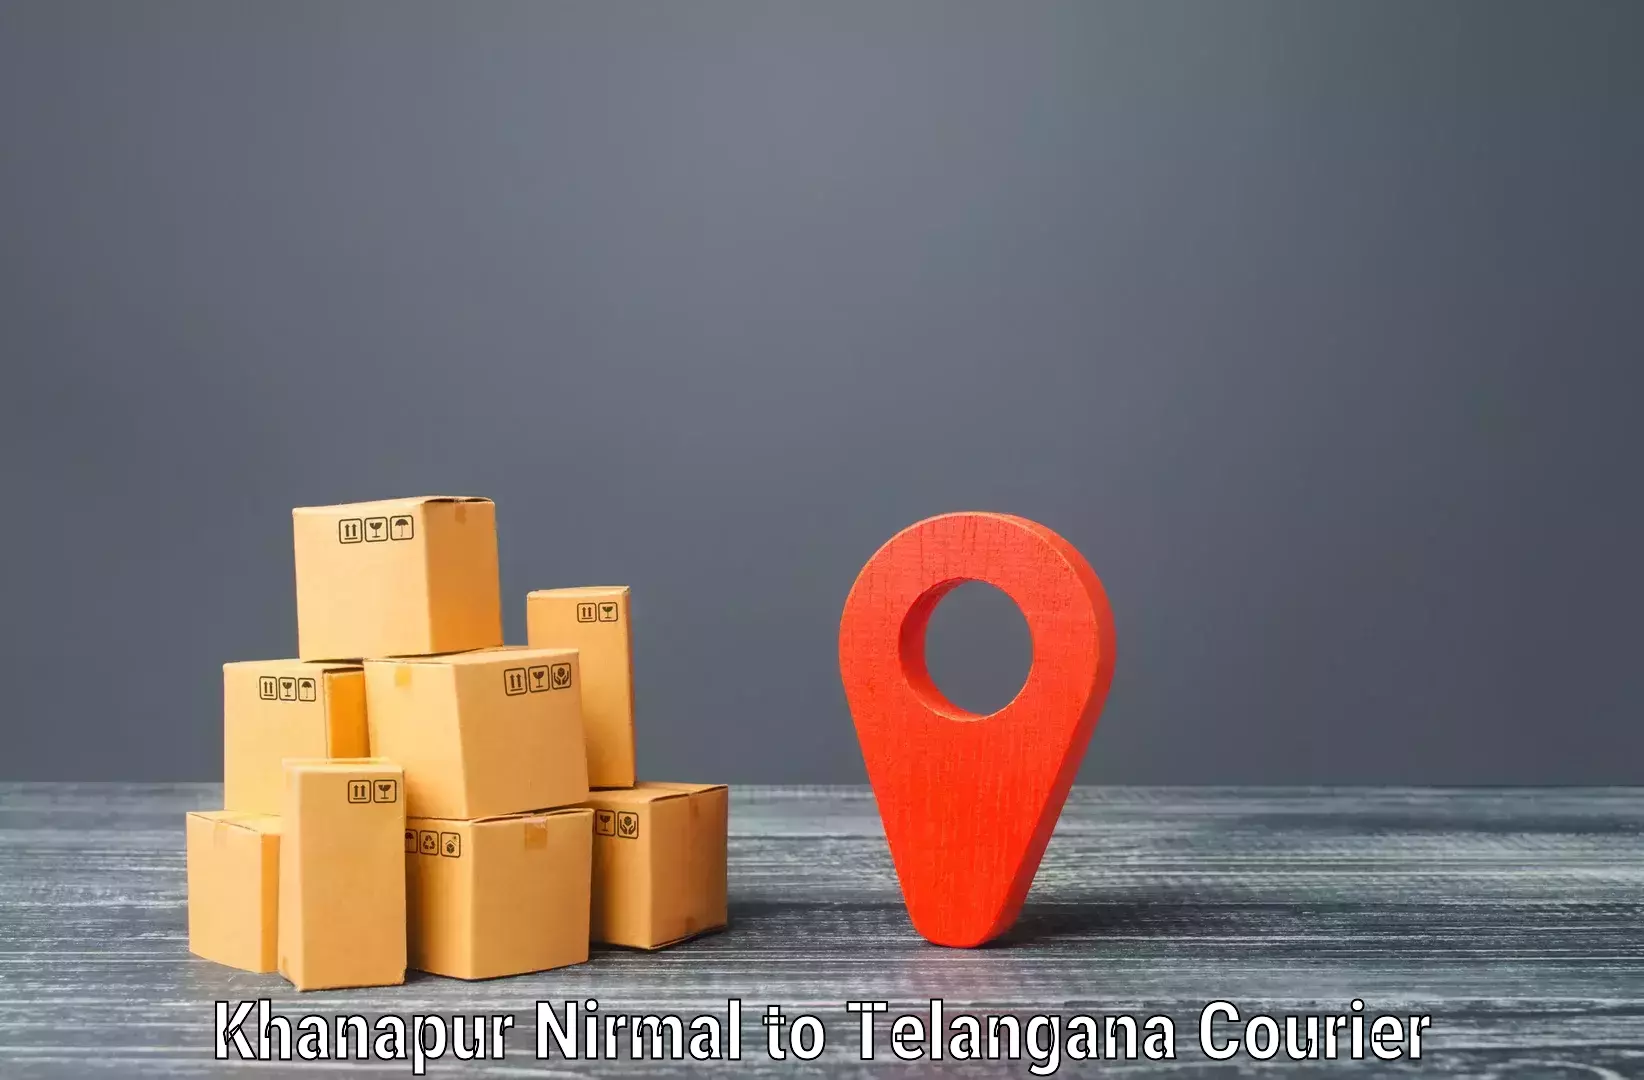 Courier service innovation Khanapur Nirmal to Sadashivpet